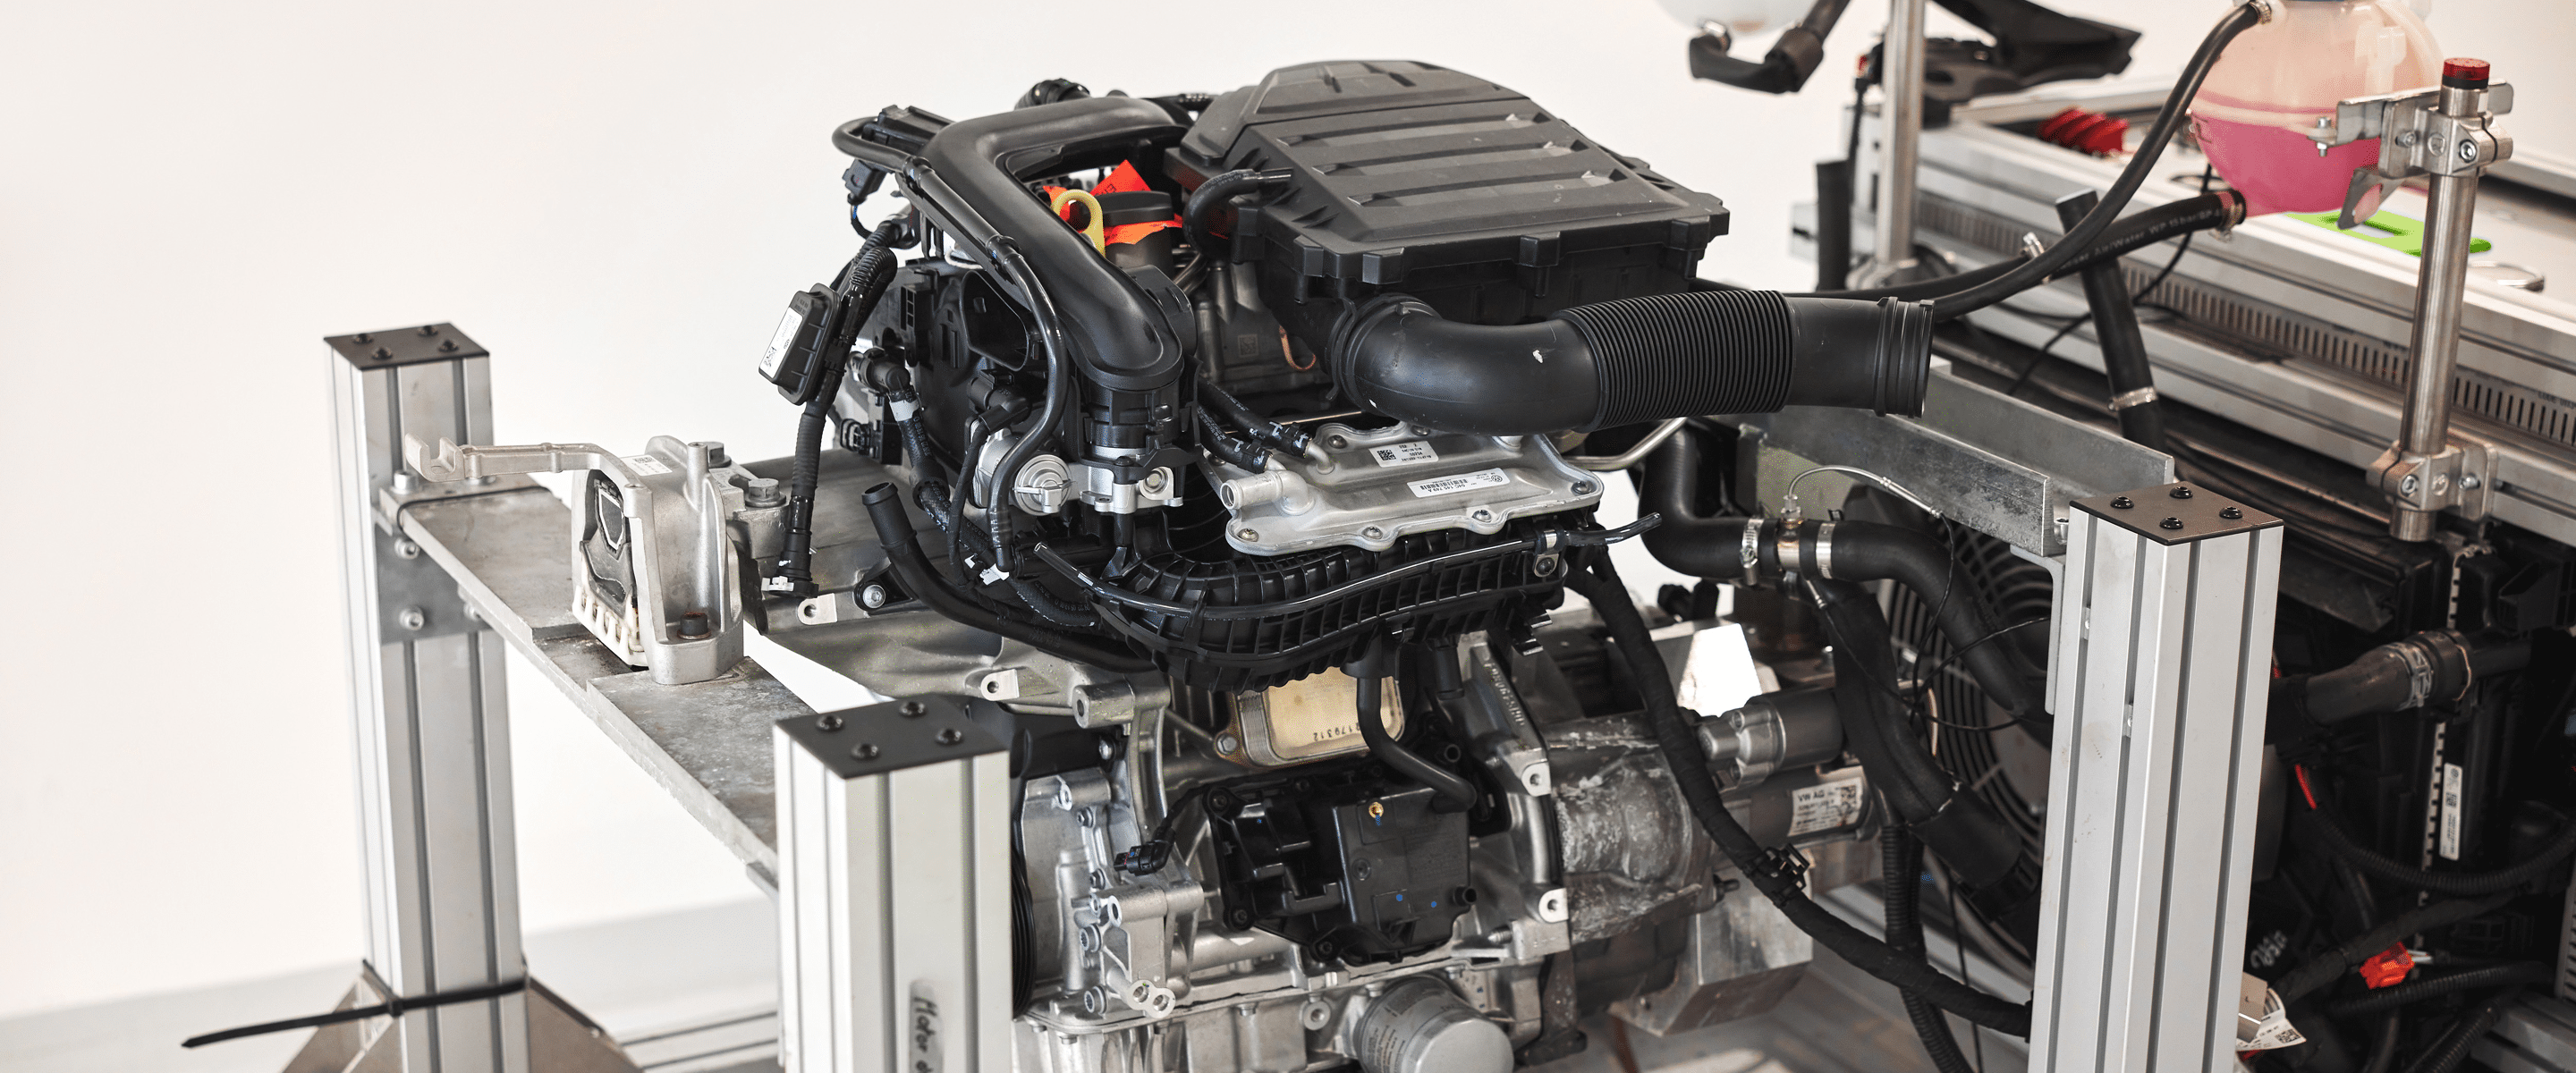 Škoda produceert nog verbrandingsmotoren, maar waarom?